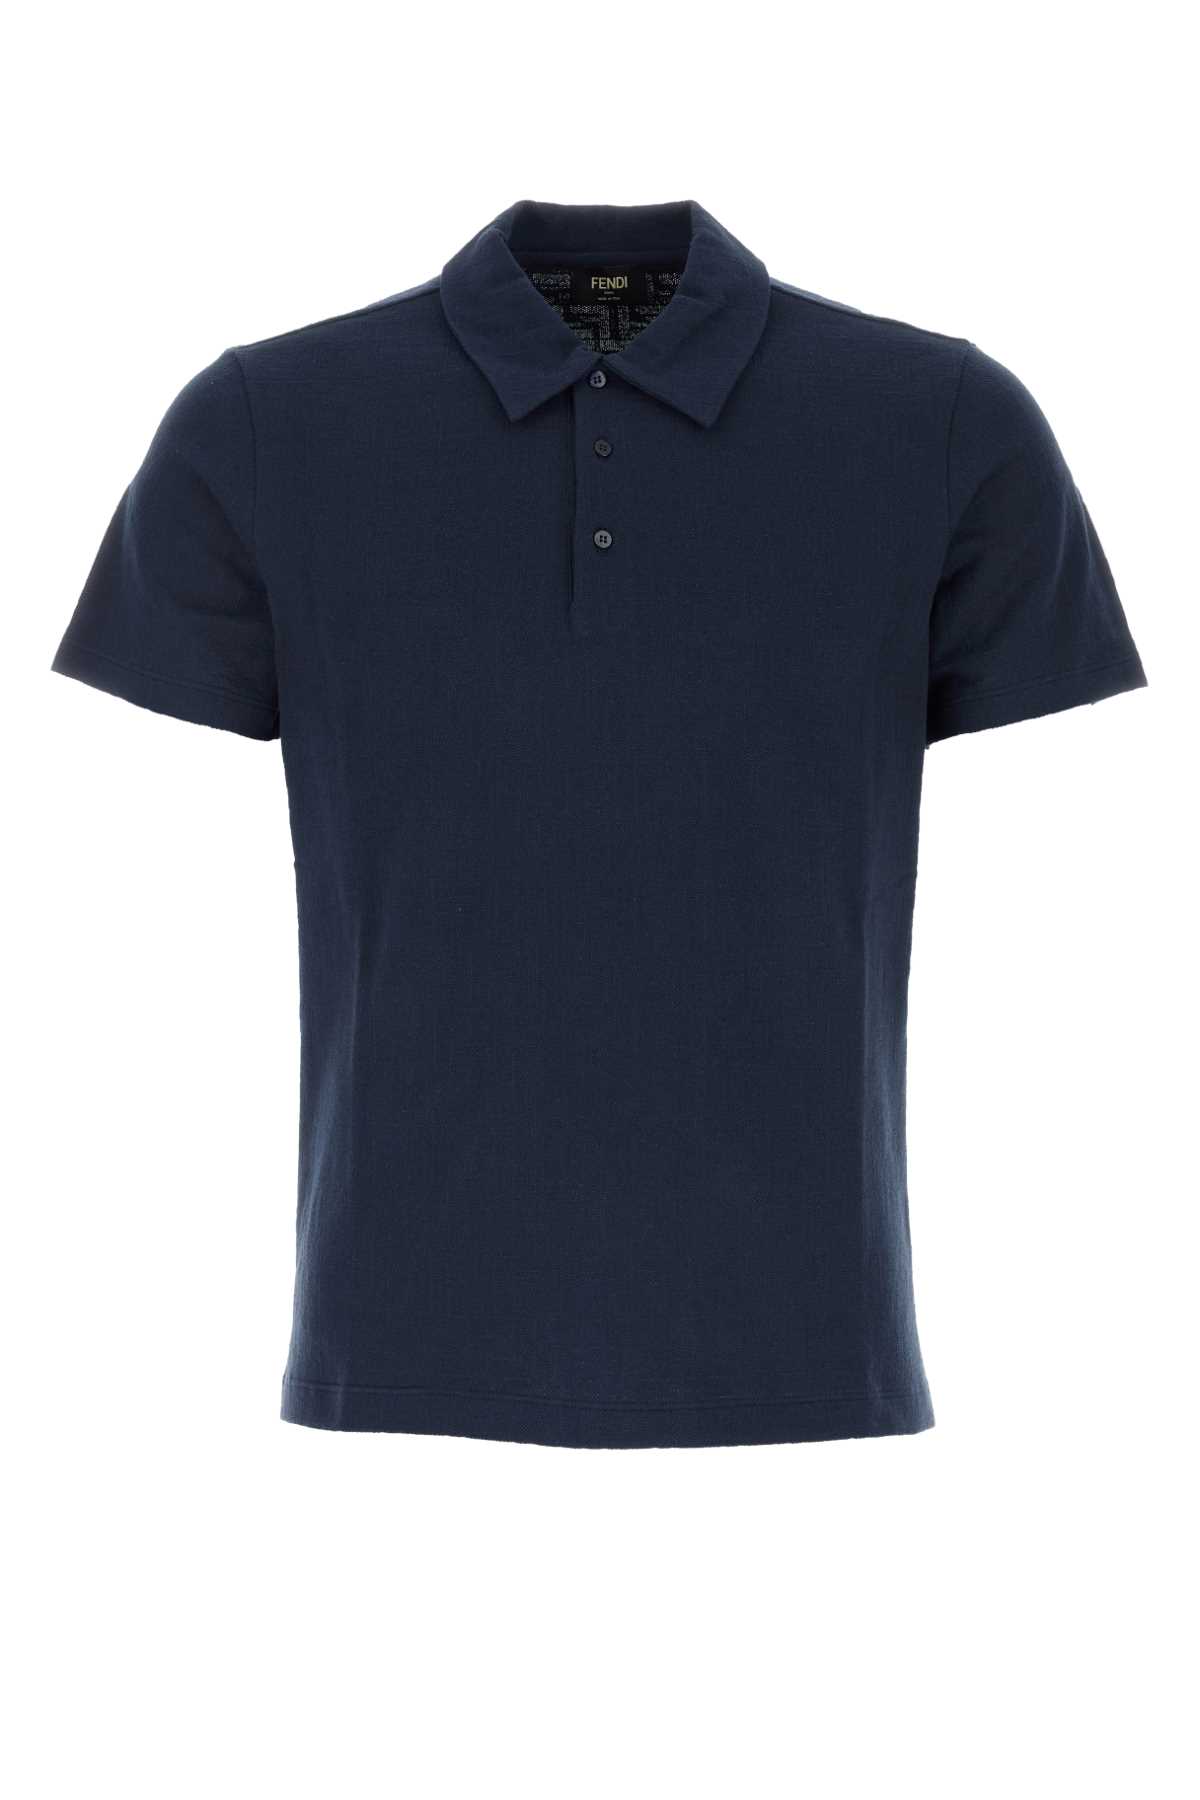 Fendi Navy Blue Piquet Polo Shirt